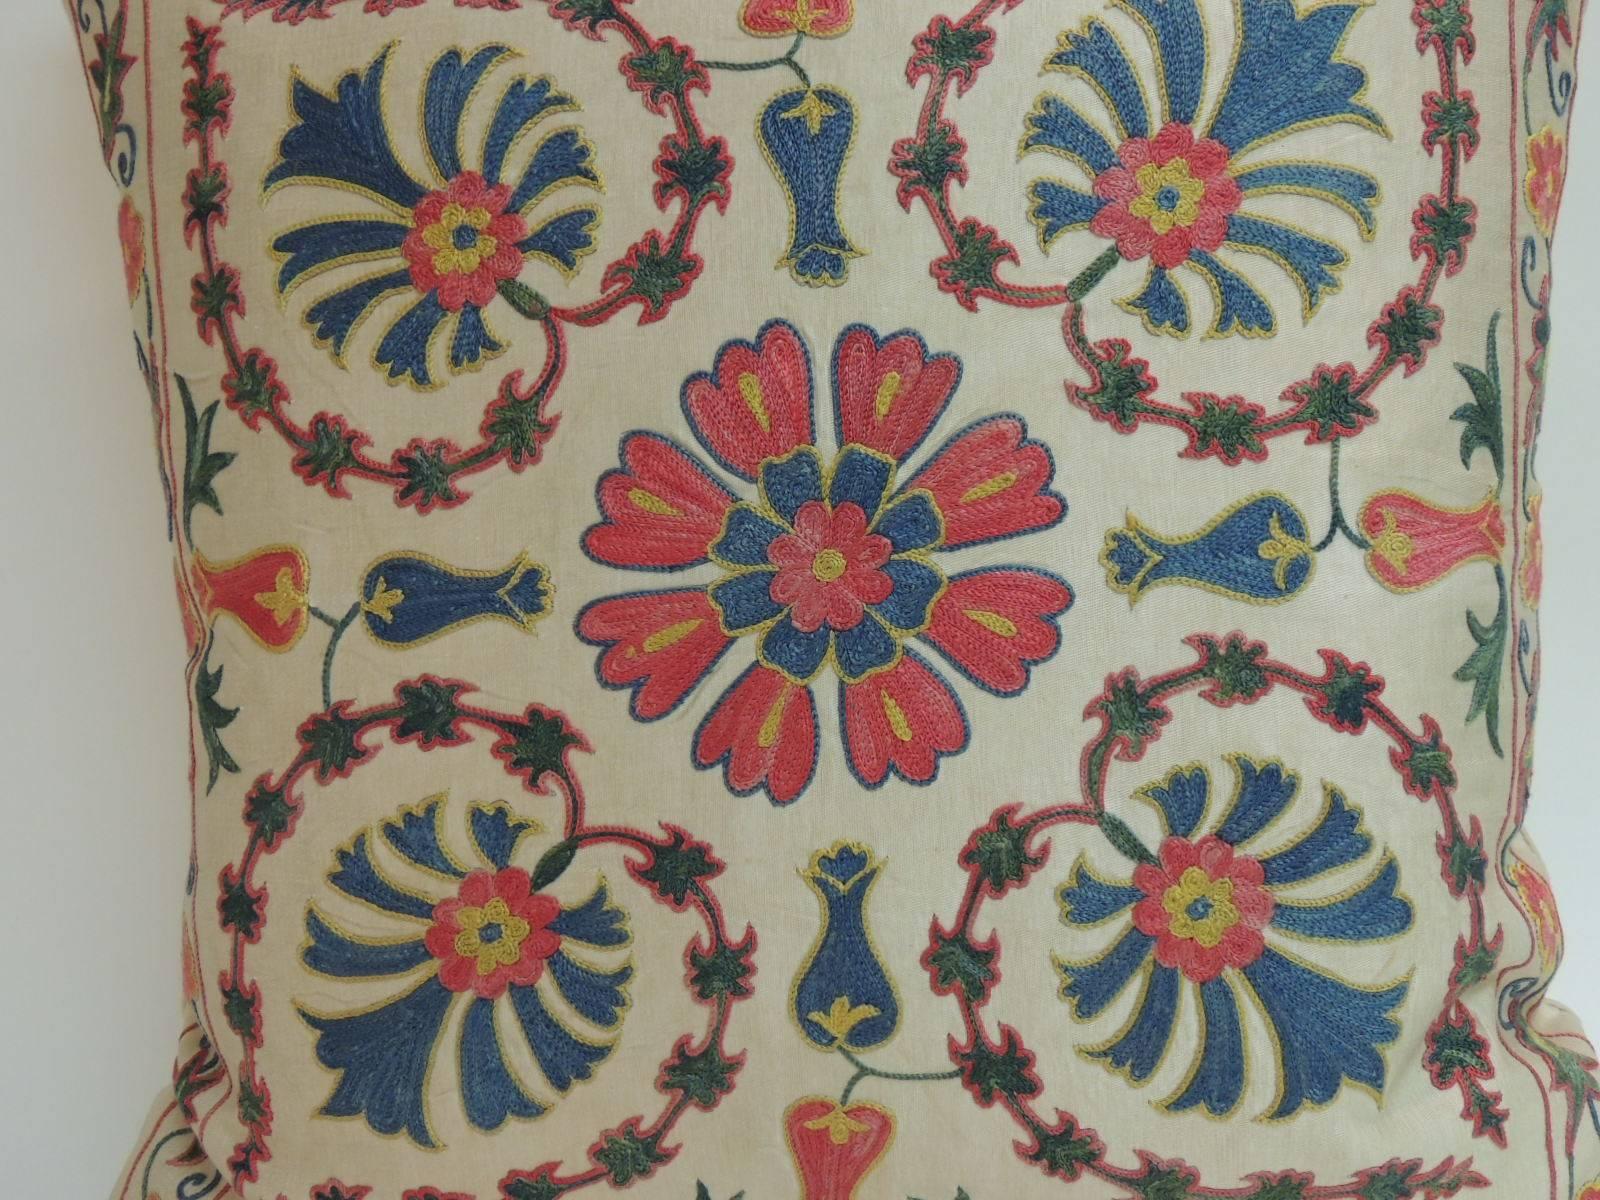 Uzbek Vintage Floral Motif Suzani Silk on Silk Embroidered Decorative Square Pillow